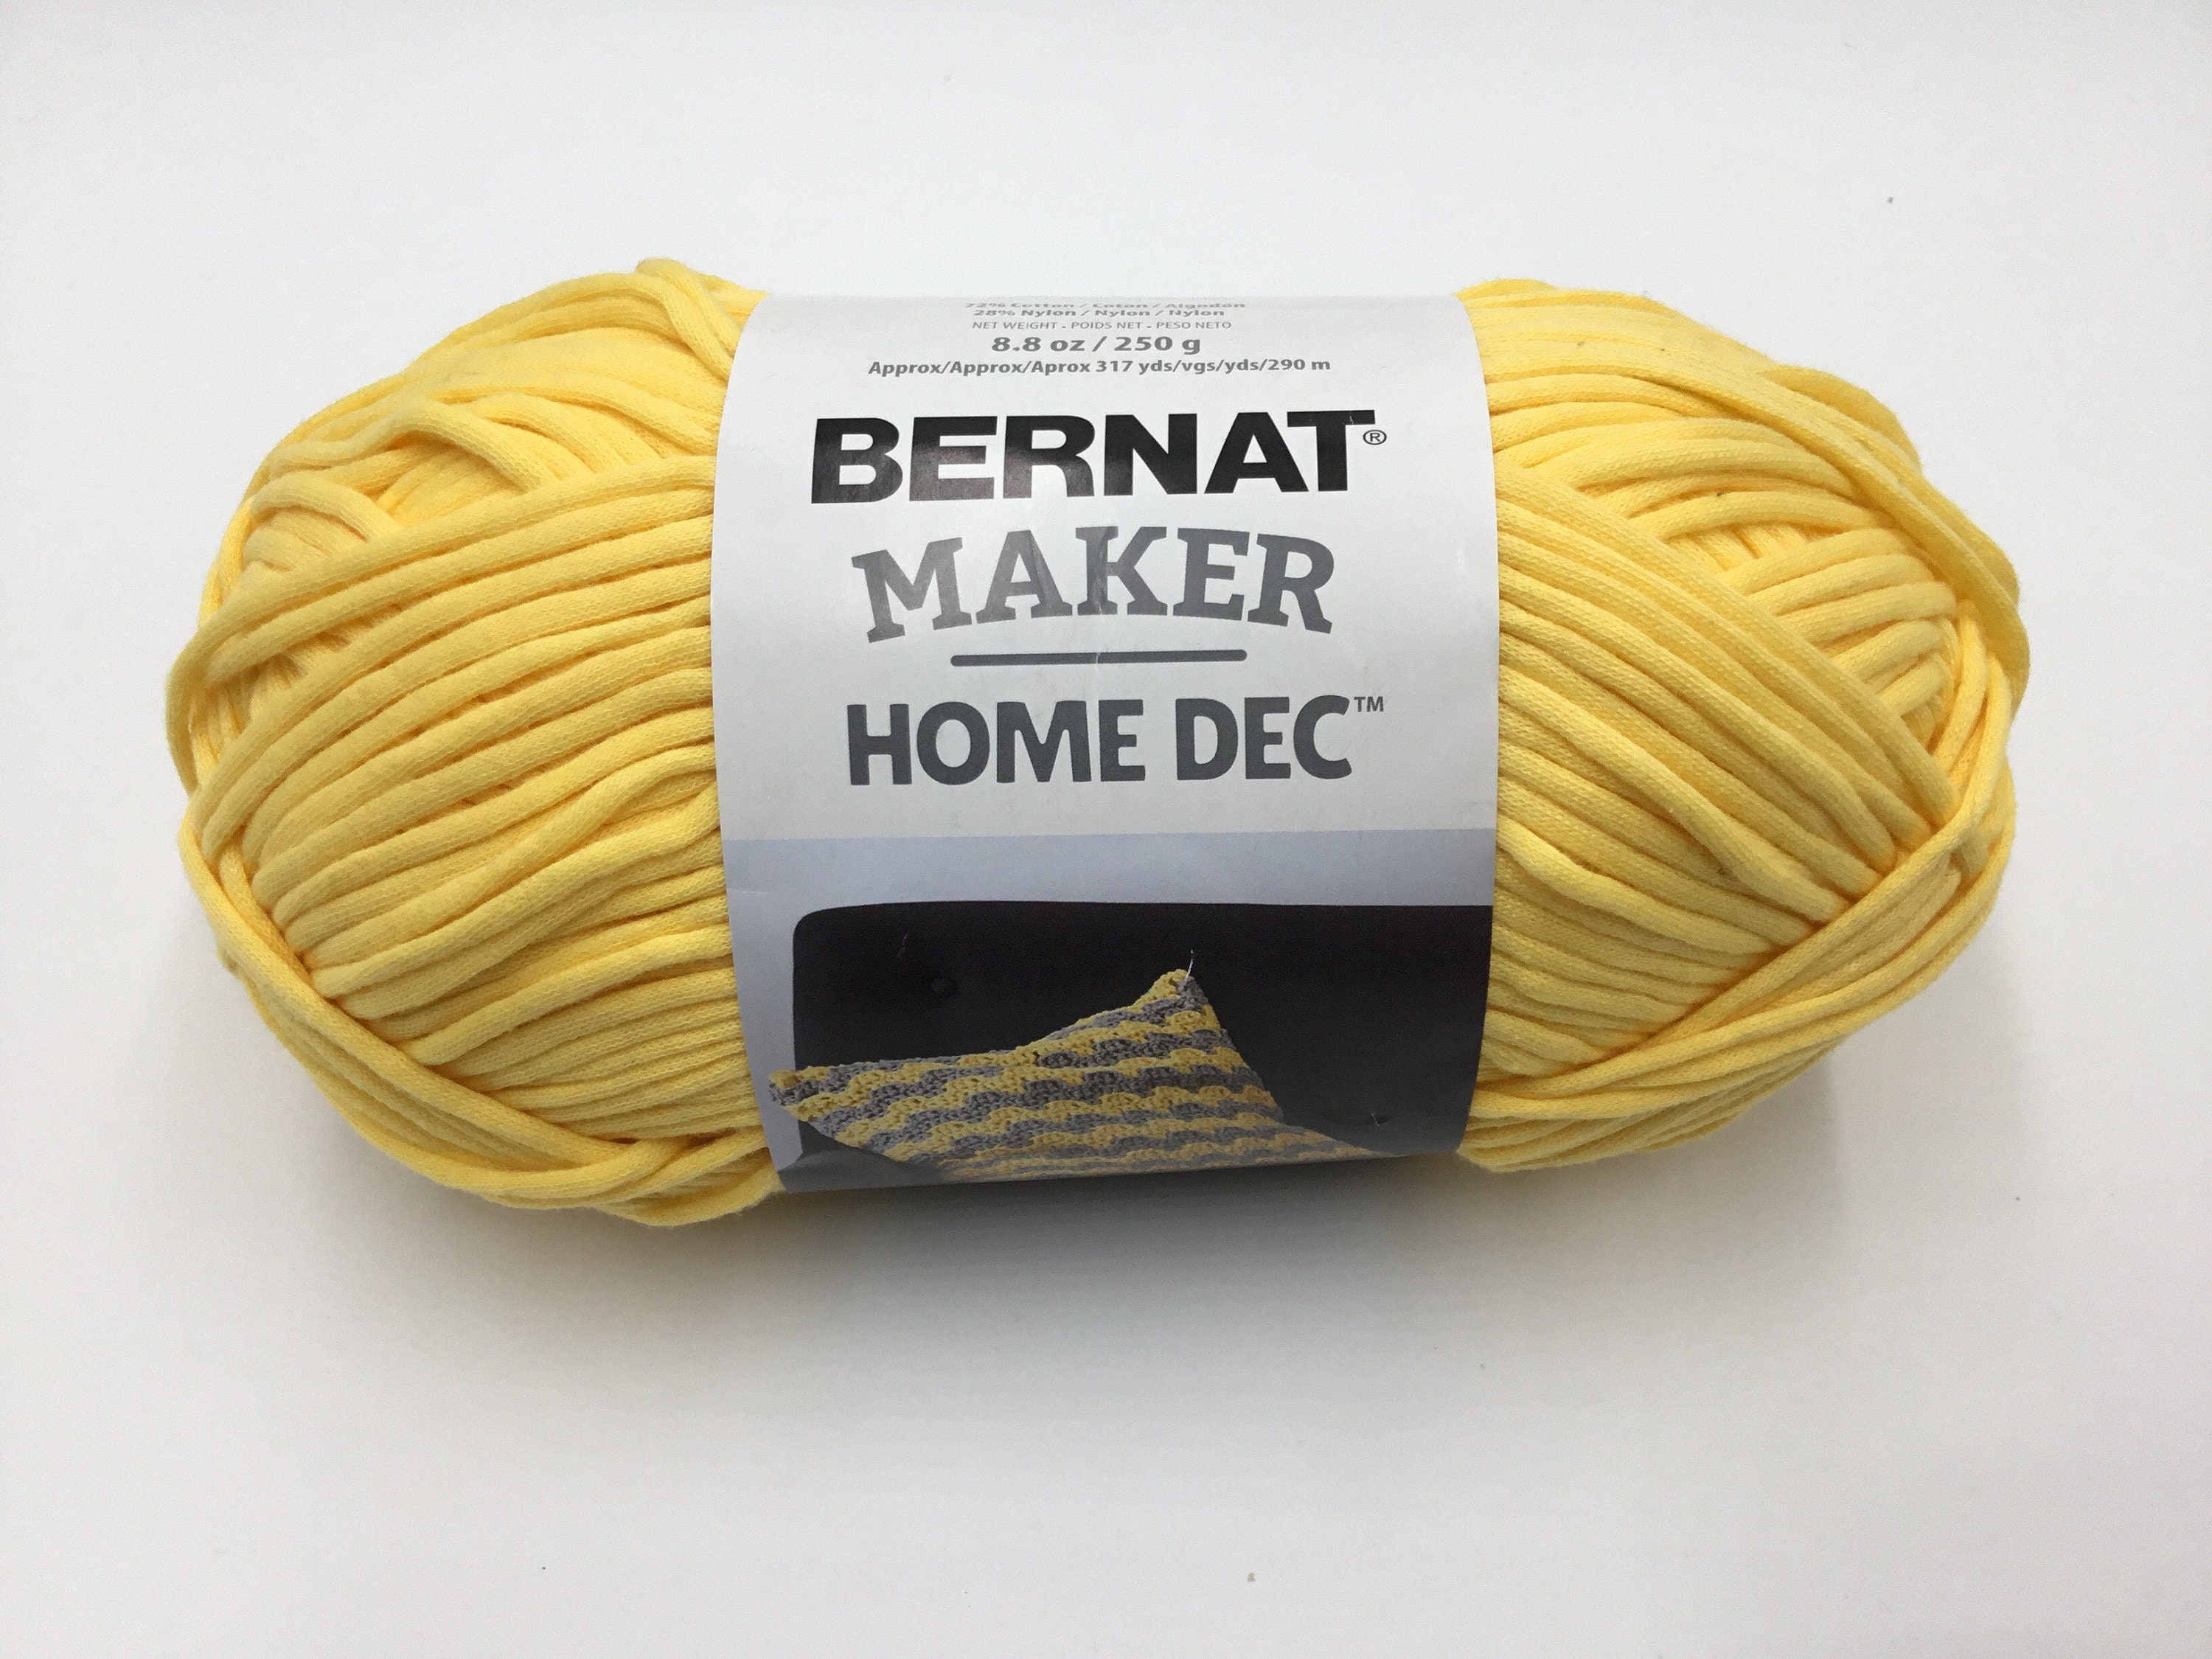 Bernat Maker Home Dec 8.8oz/250g gold 